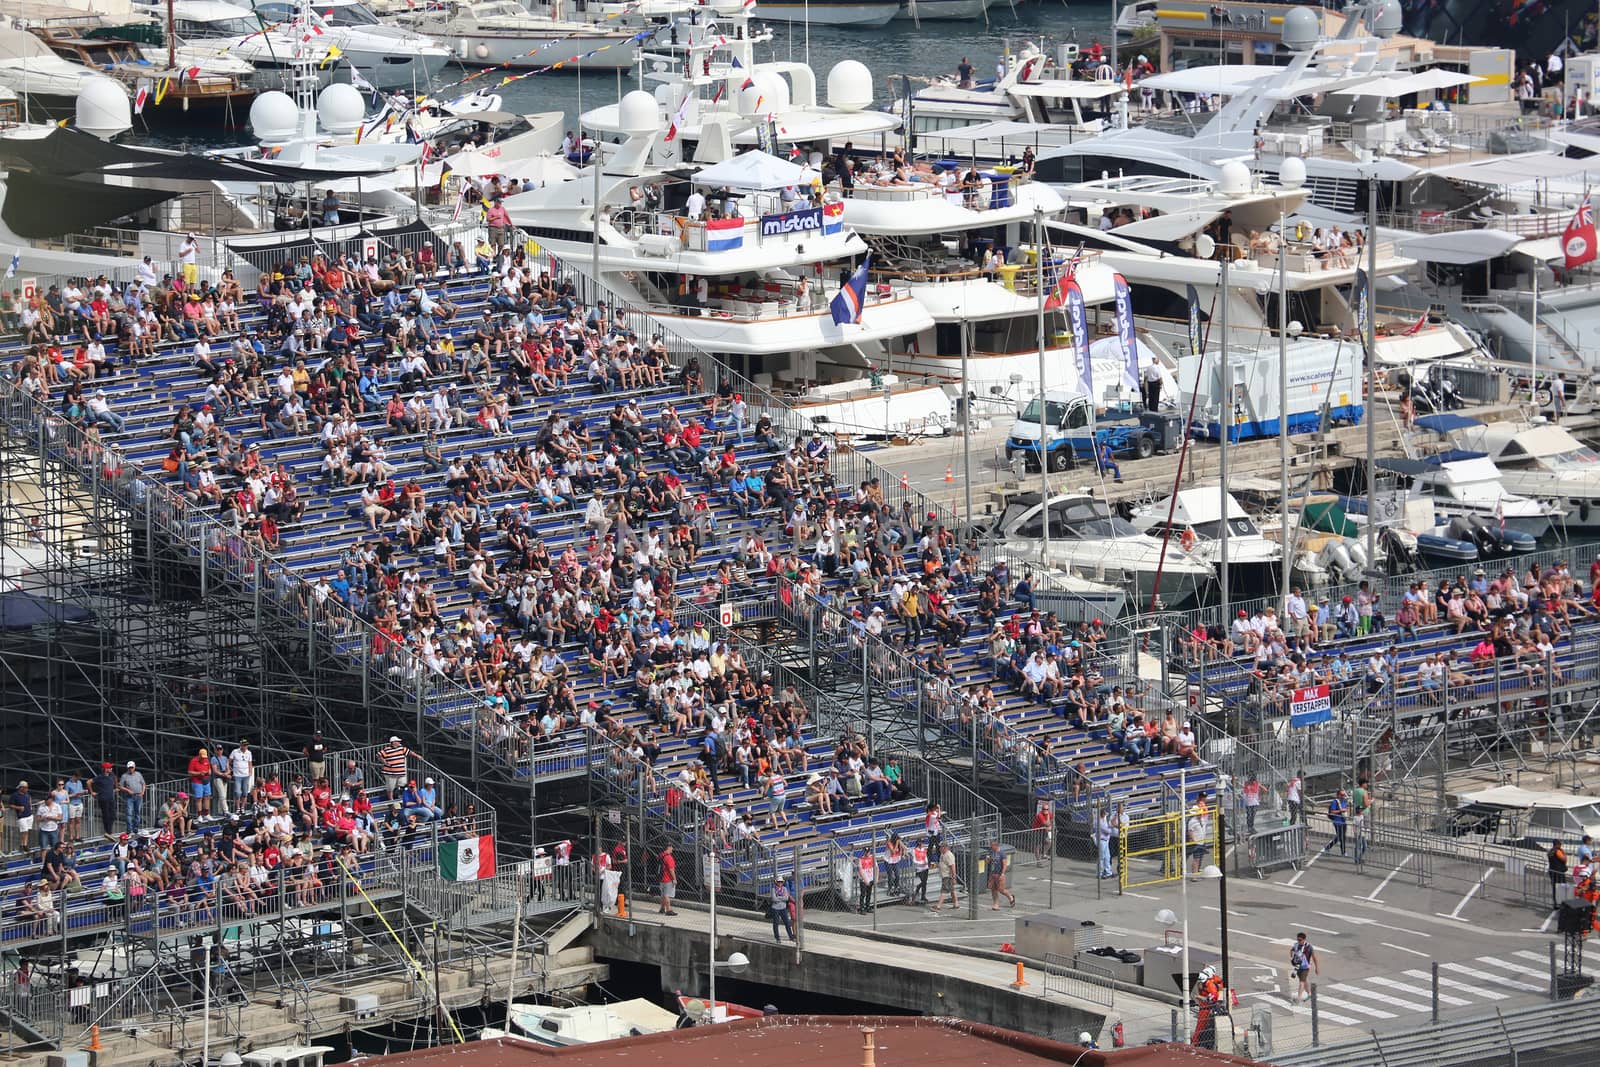 La Condamine, Monaco - May 28, 2016: Many Spectators in the Tribunes and People on Yachts For the Monaco Formula 1 Grand Prix 2016